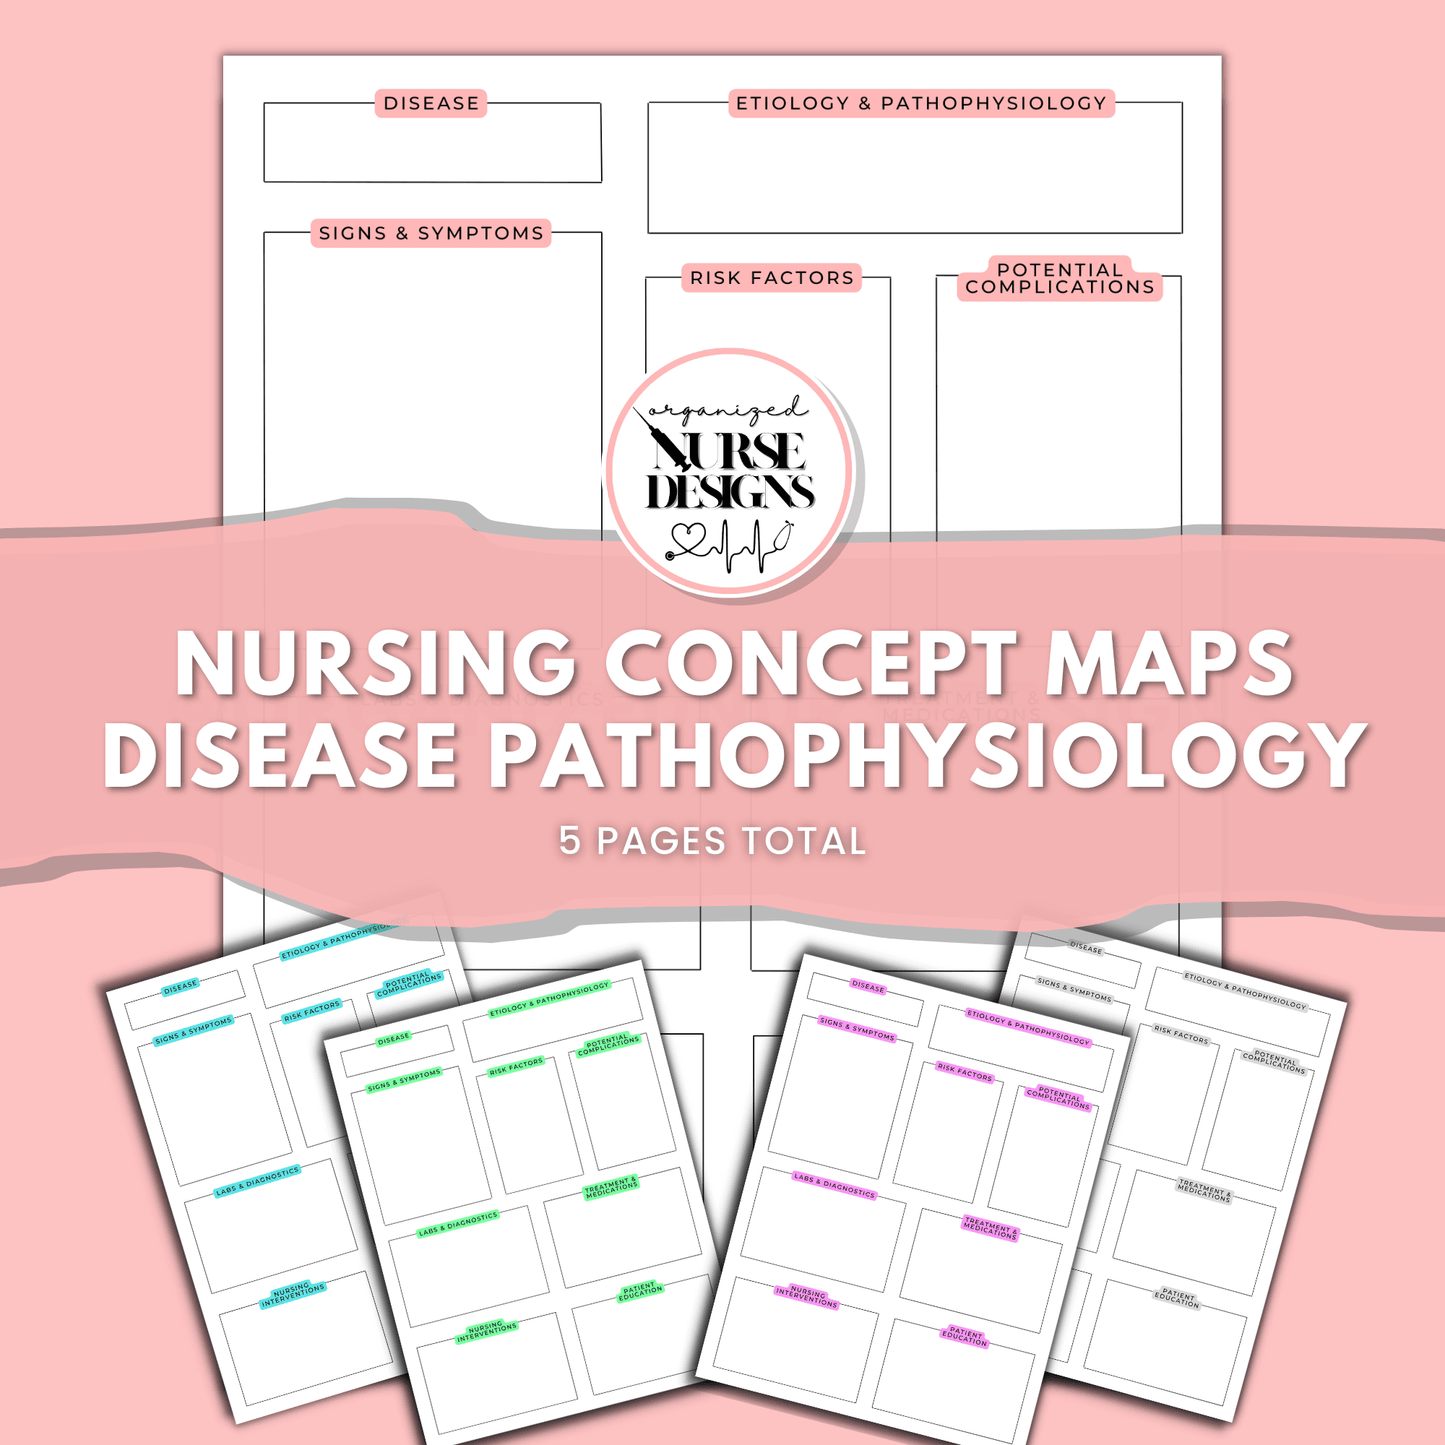 Med Surg Nursing Concept Maps for Nursing Students by OrganizedNurseDesigns